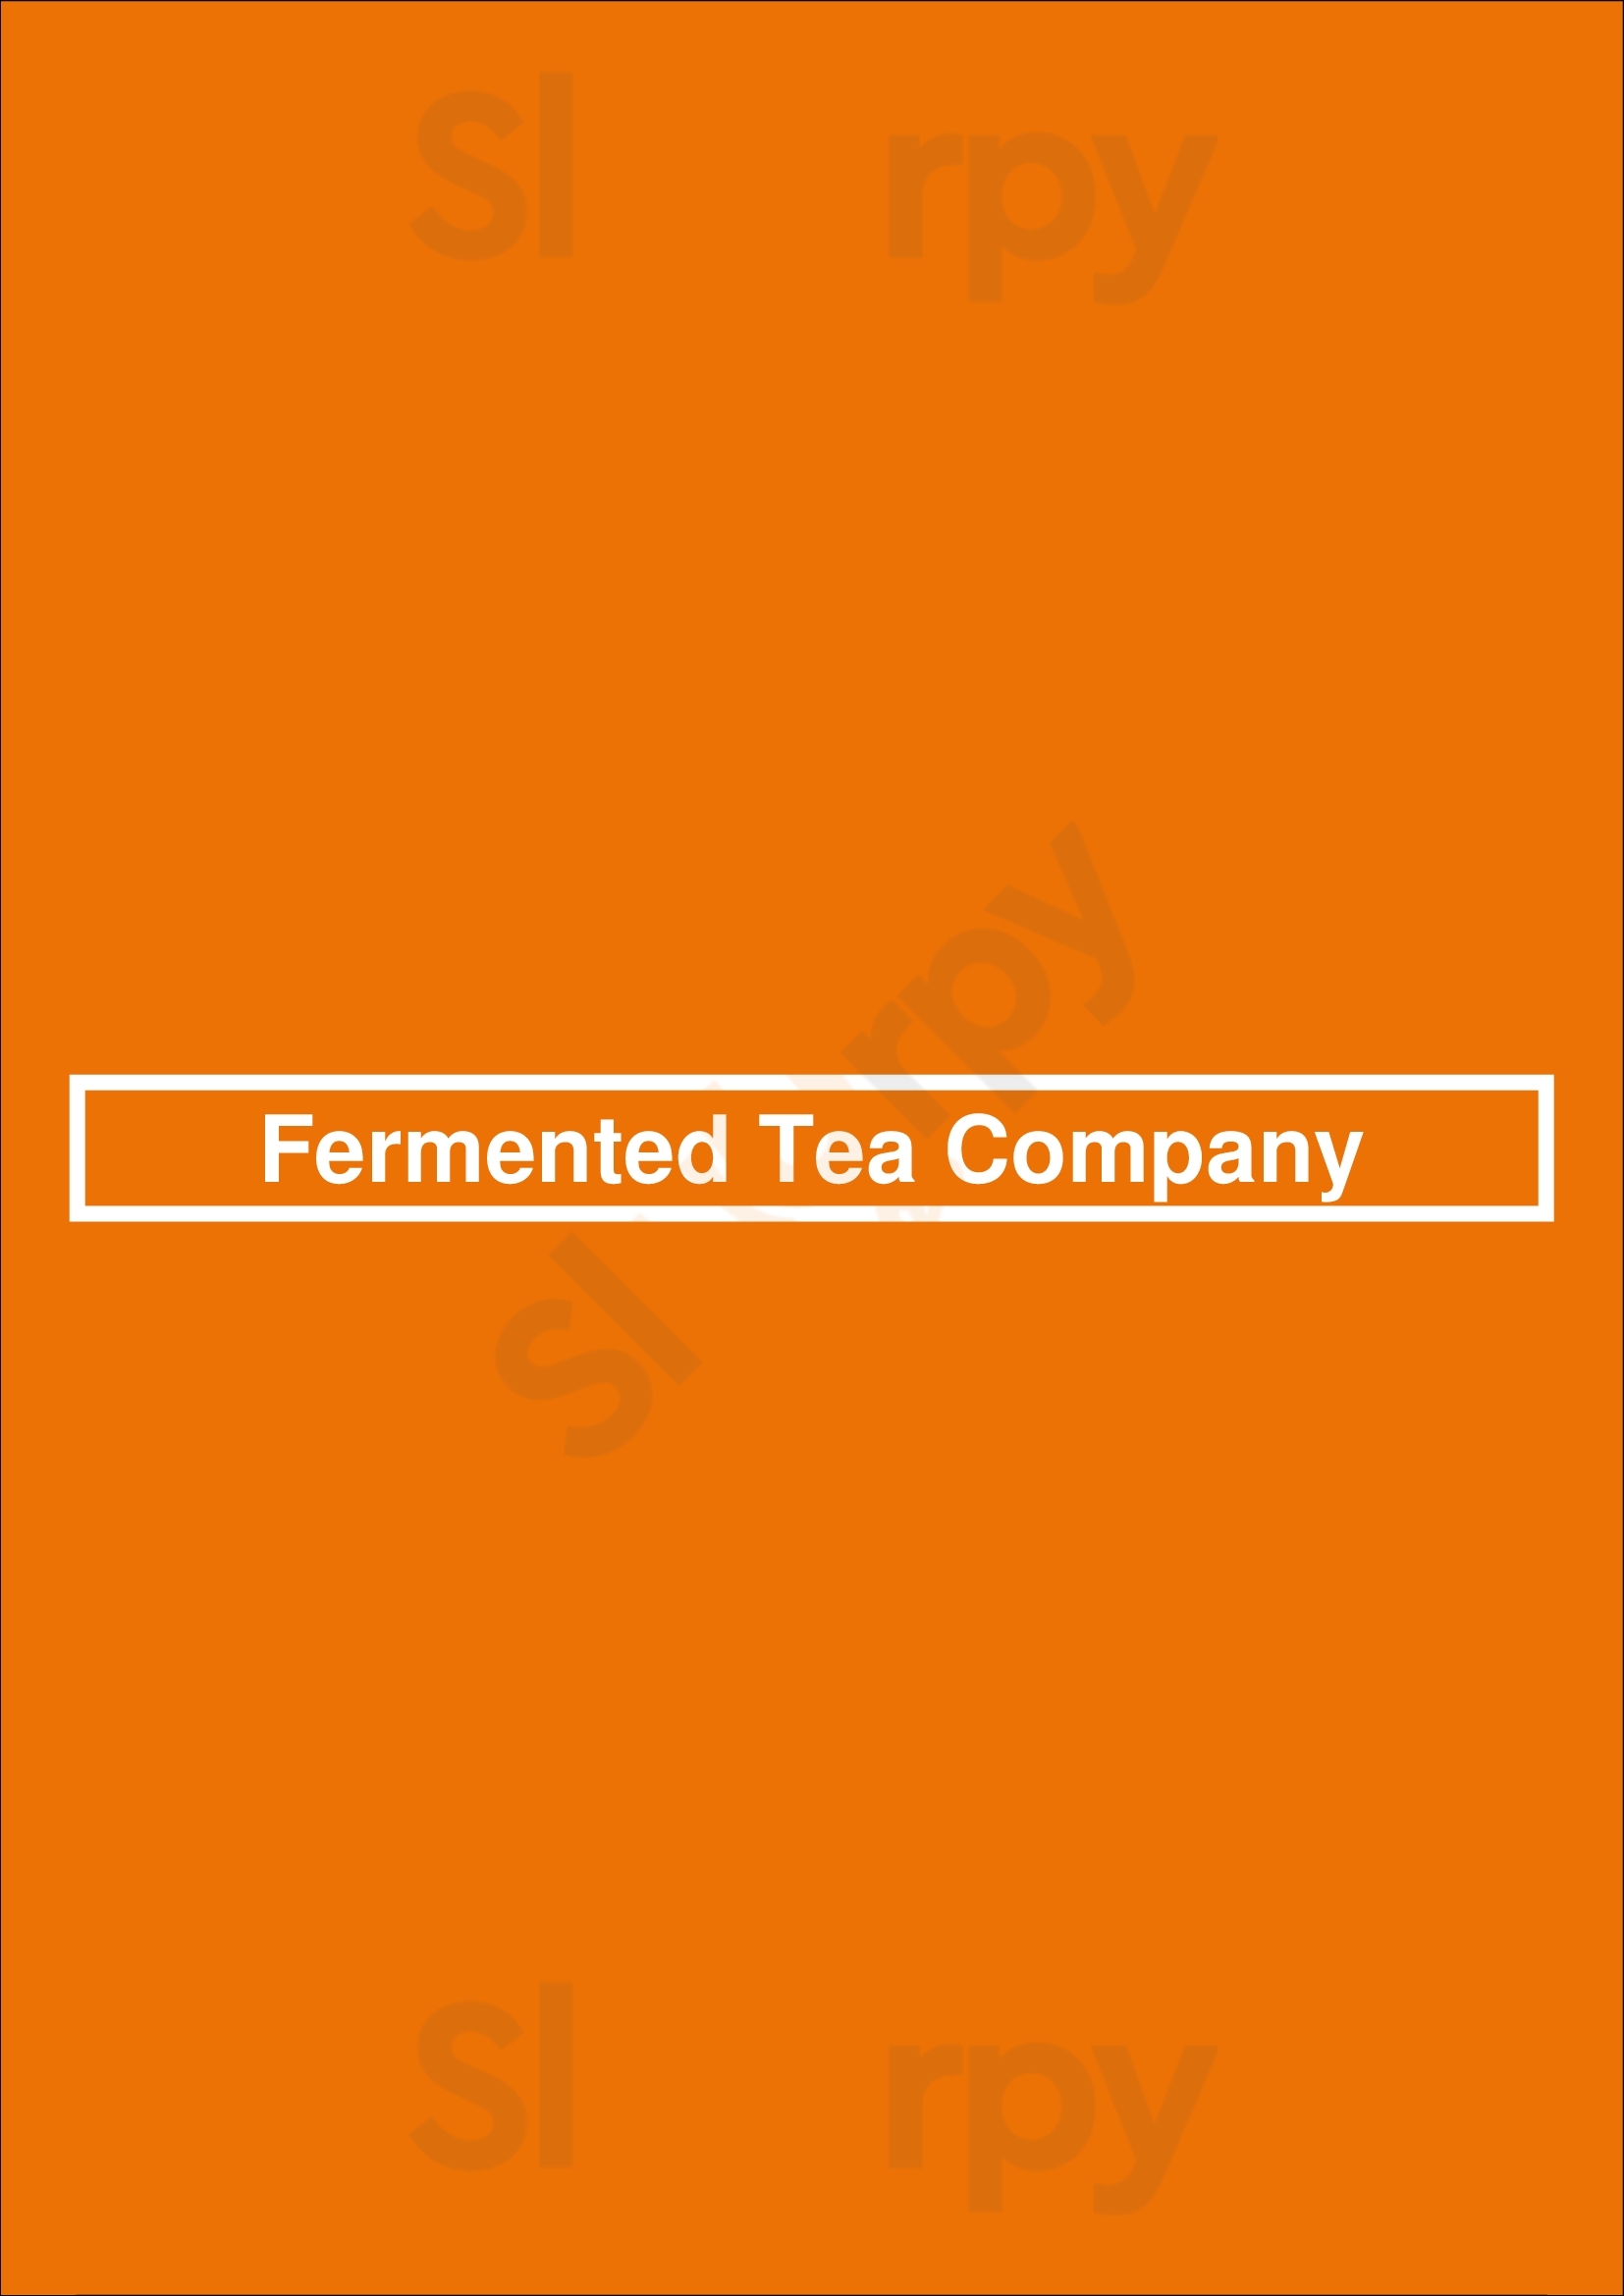 Fermented Tea Company Tucson Menu - 1